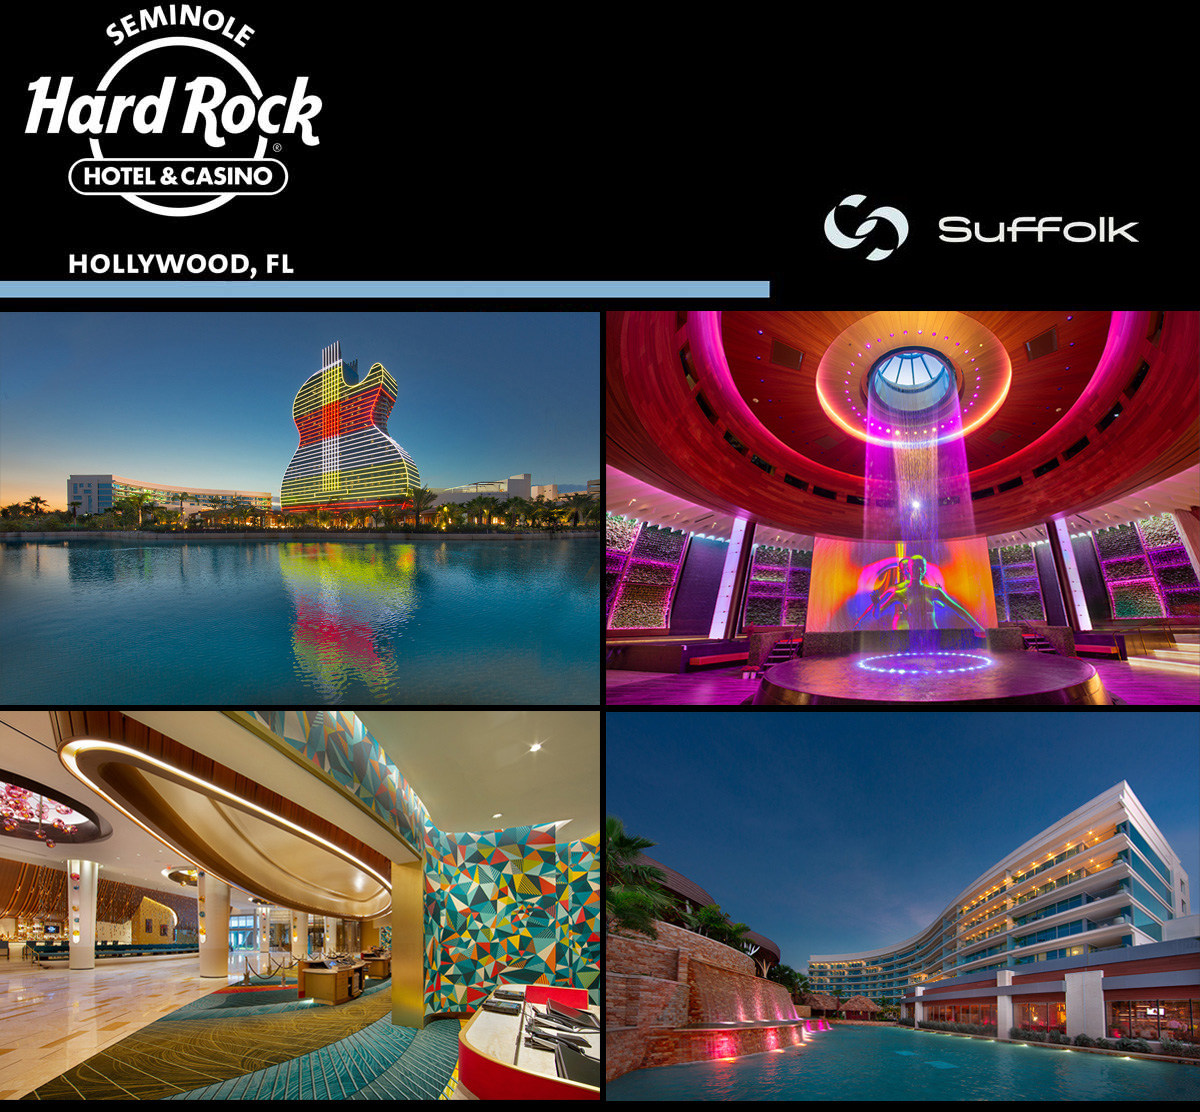 Hard Rock Hollywood hotel and casino.